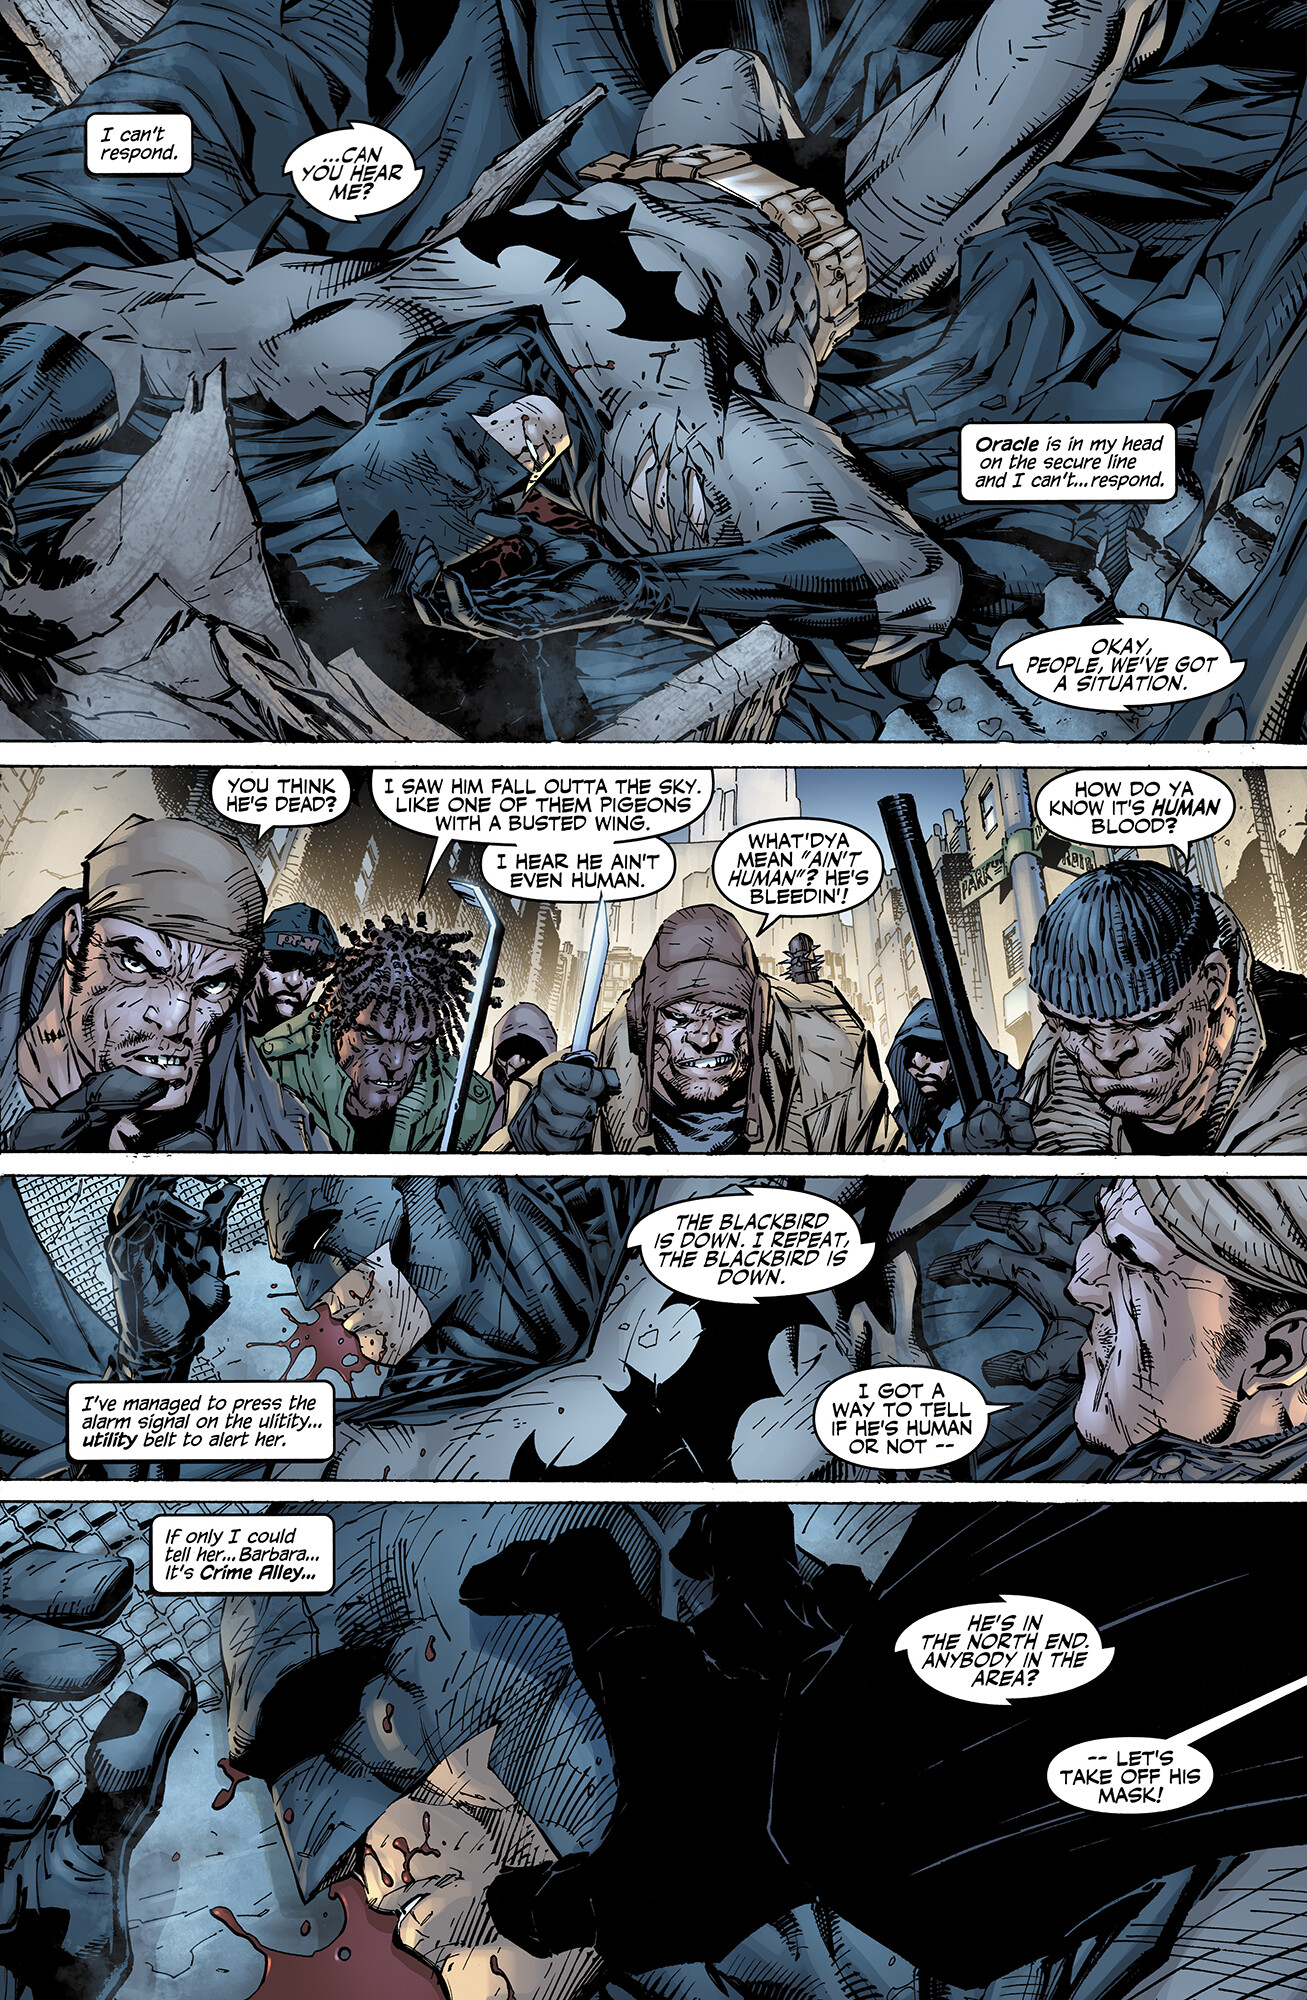 ArtStation - Issue 2, Page 1 - Batman: Hush